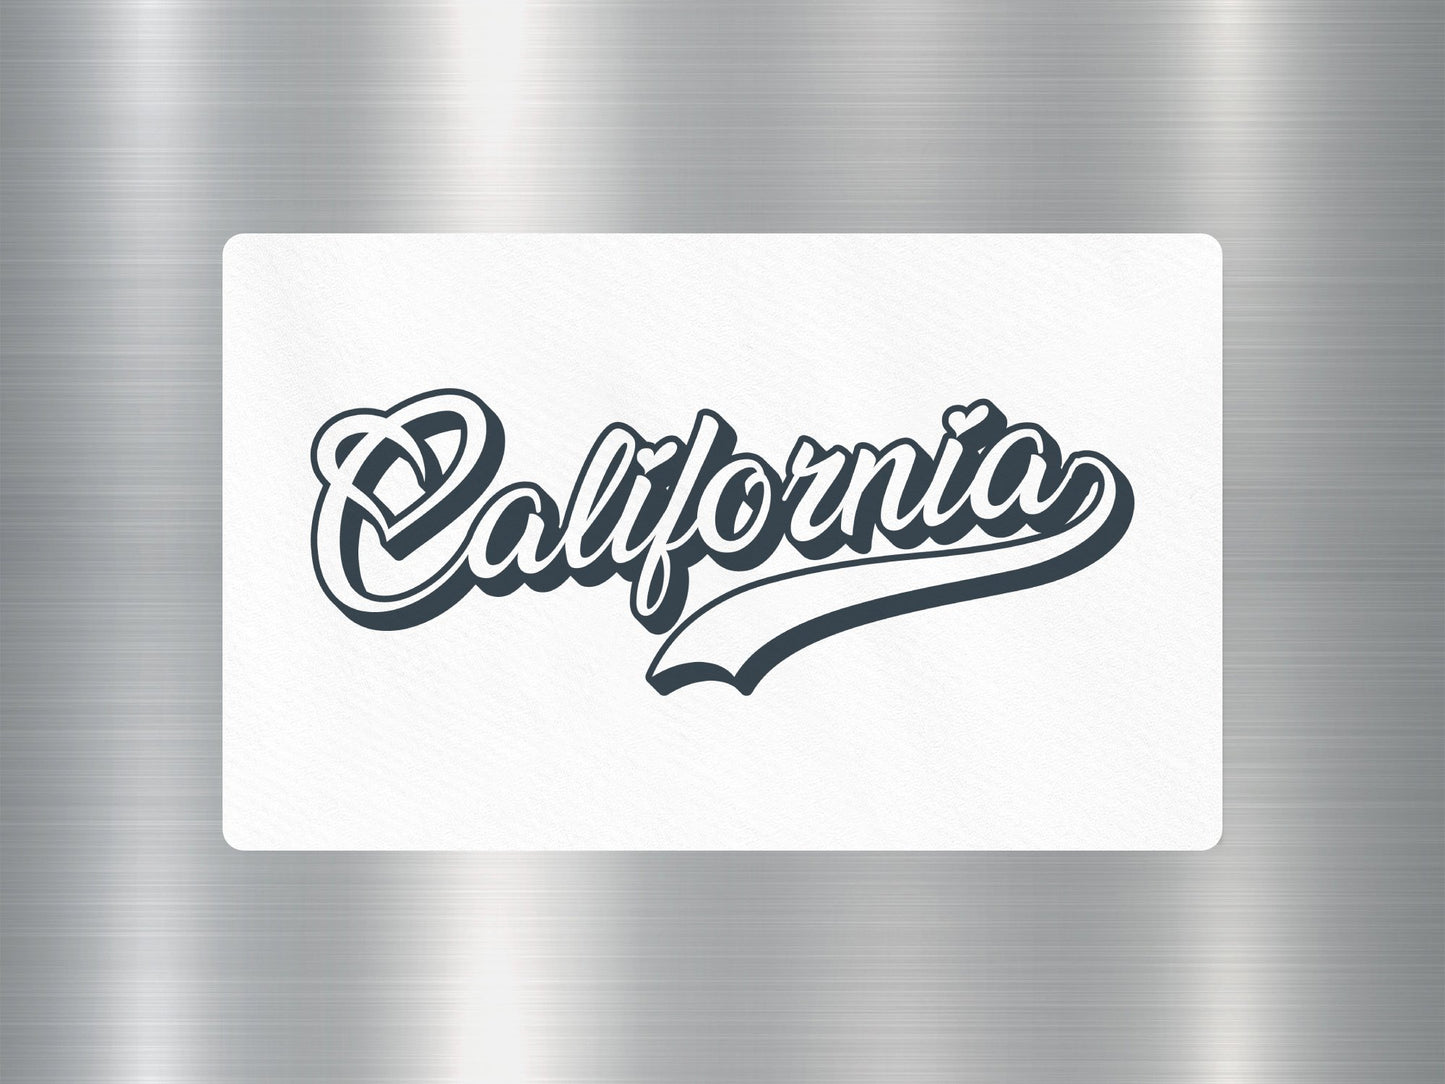 California Travel Sticker